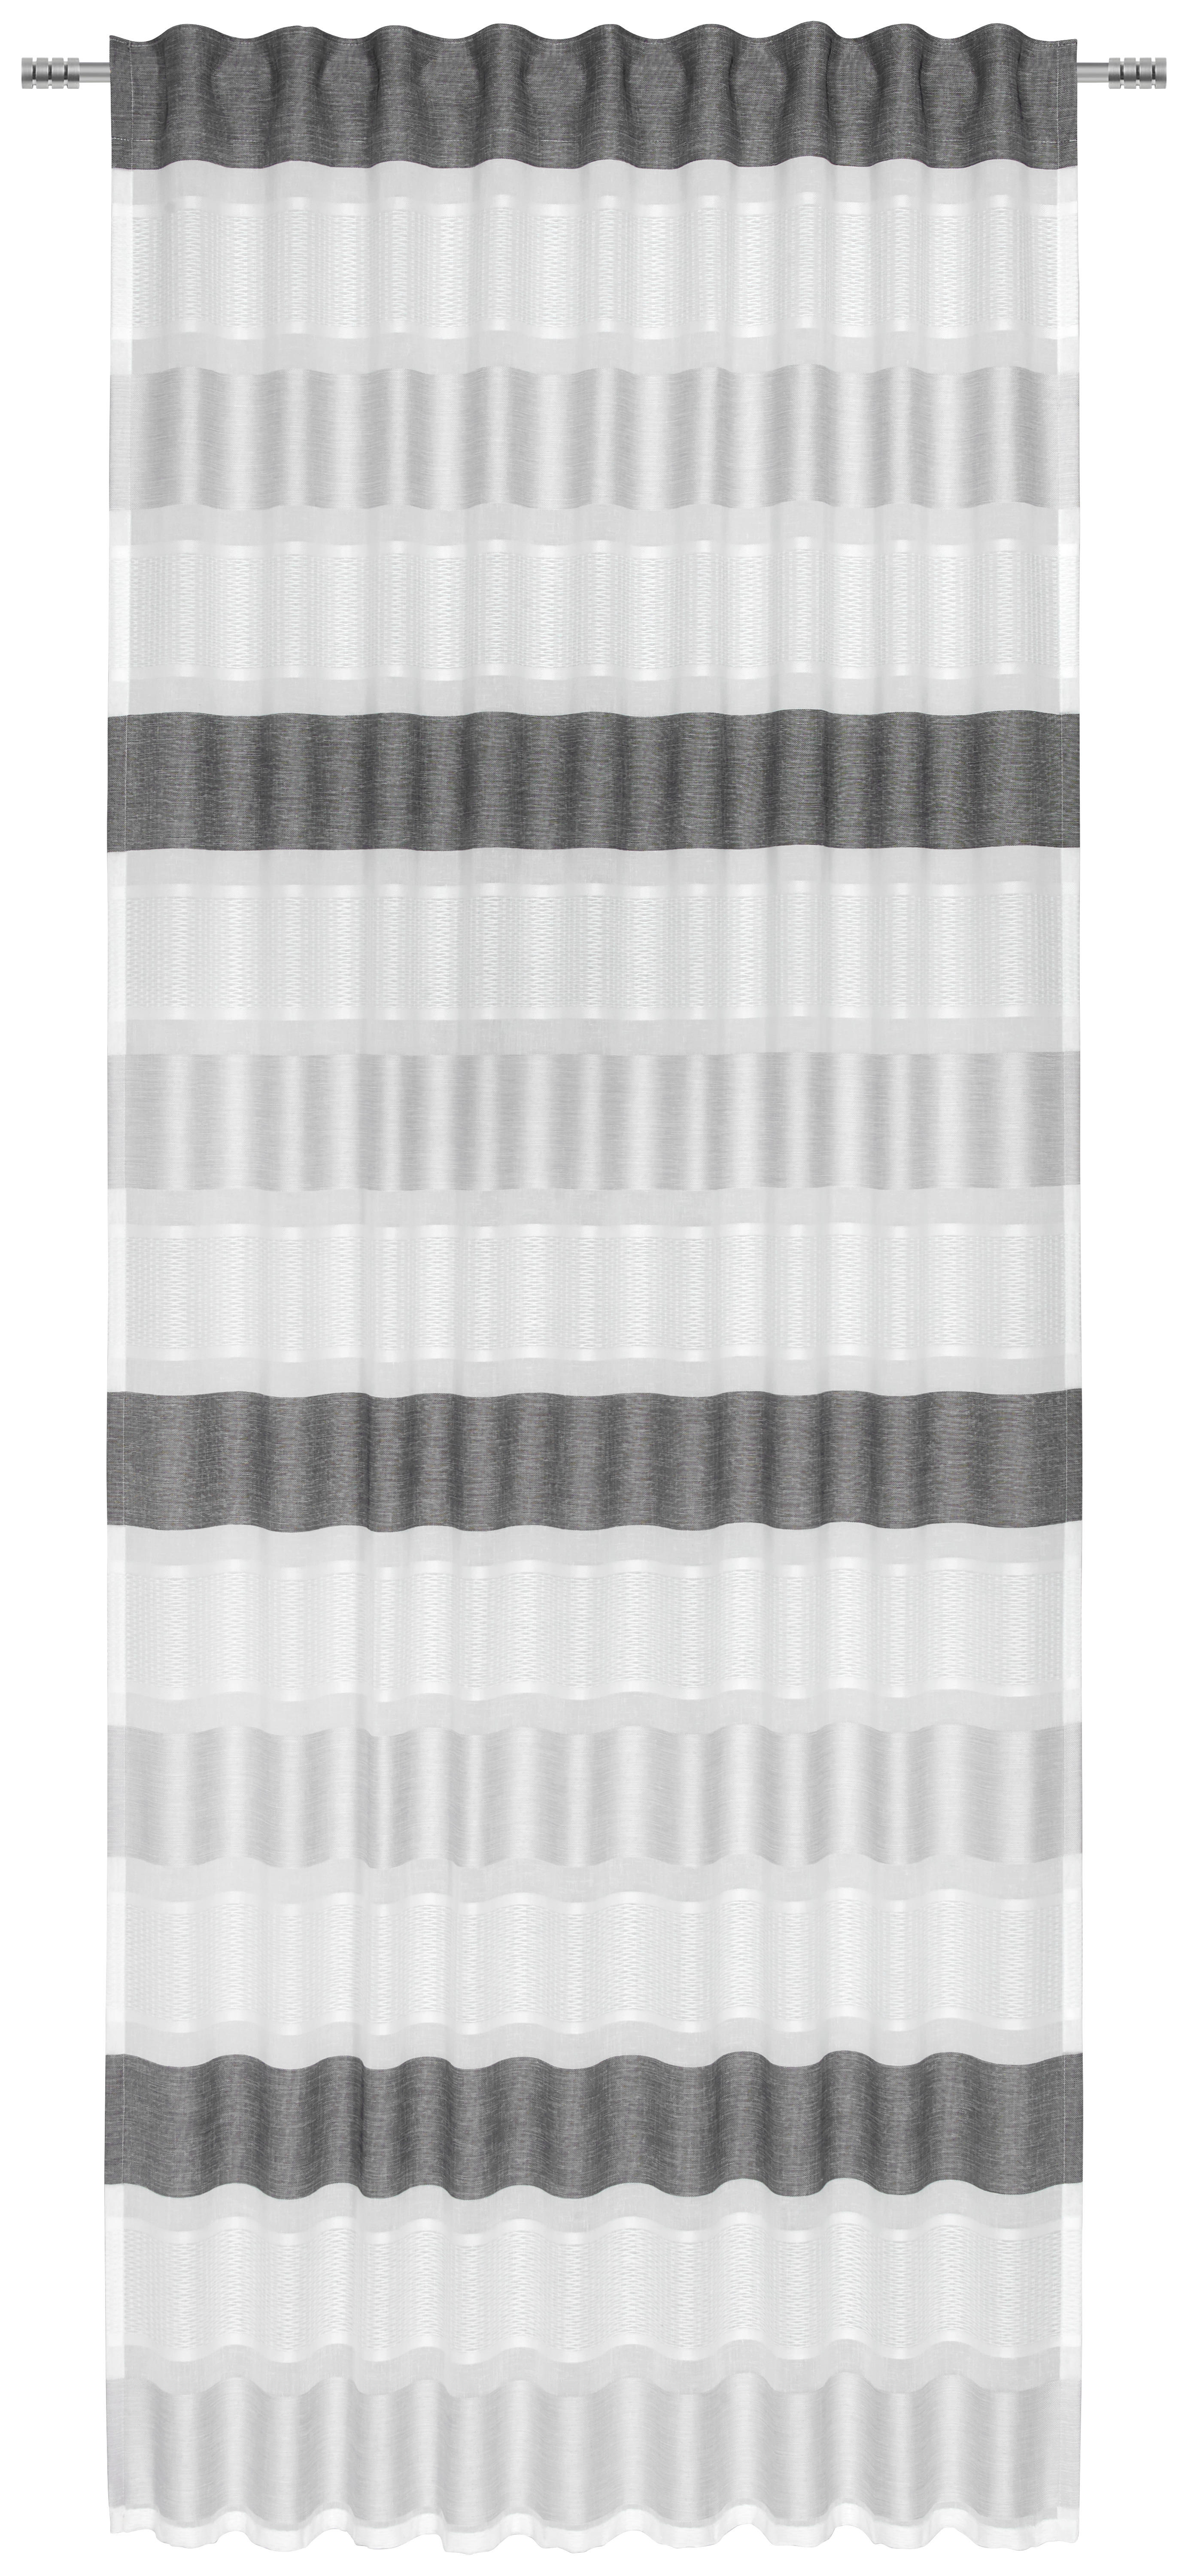 FERTIGVORHANG DUNORO halbtransparent 140/245 cm   - Schwarz, Design, Textil (140/245cm) - Esposa